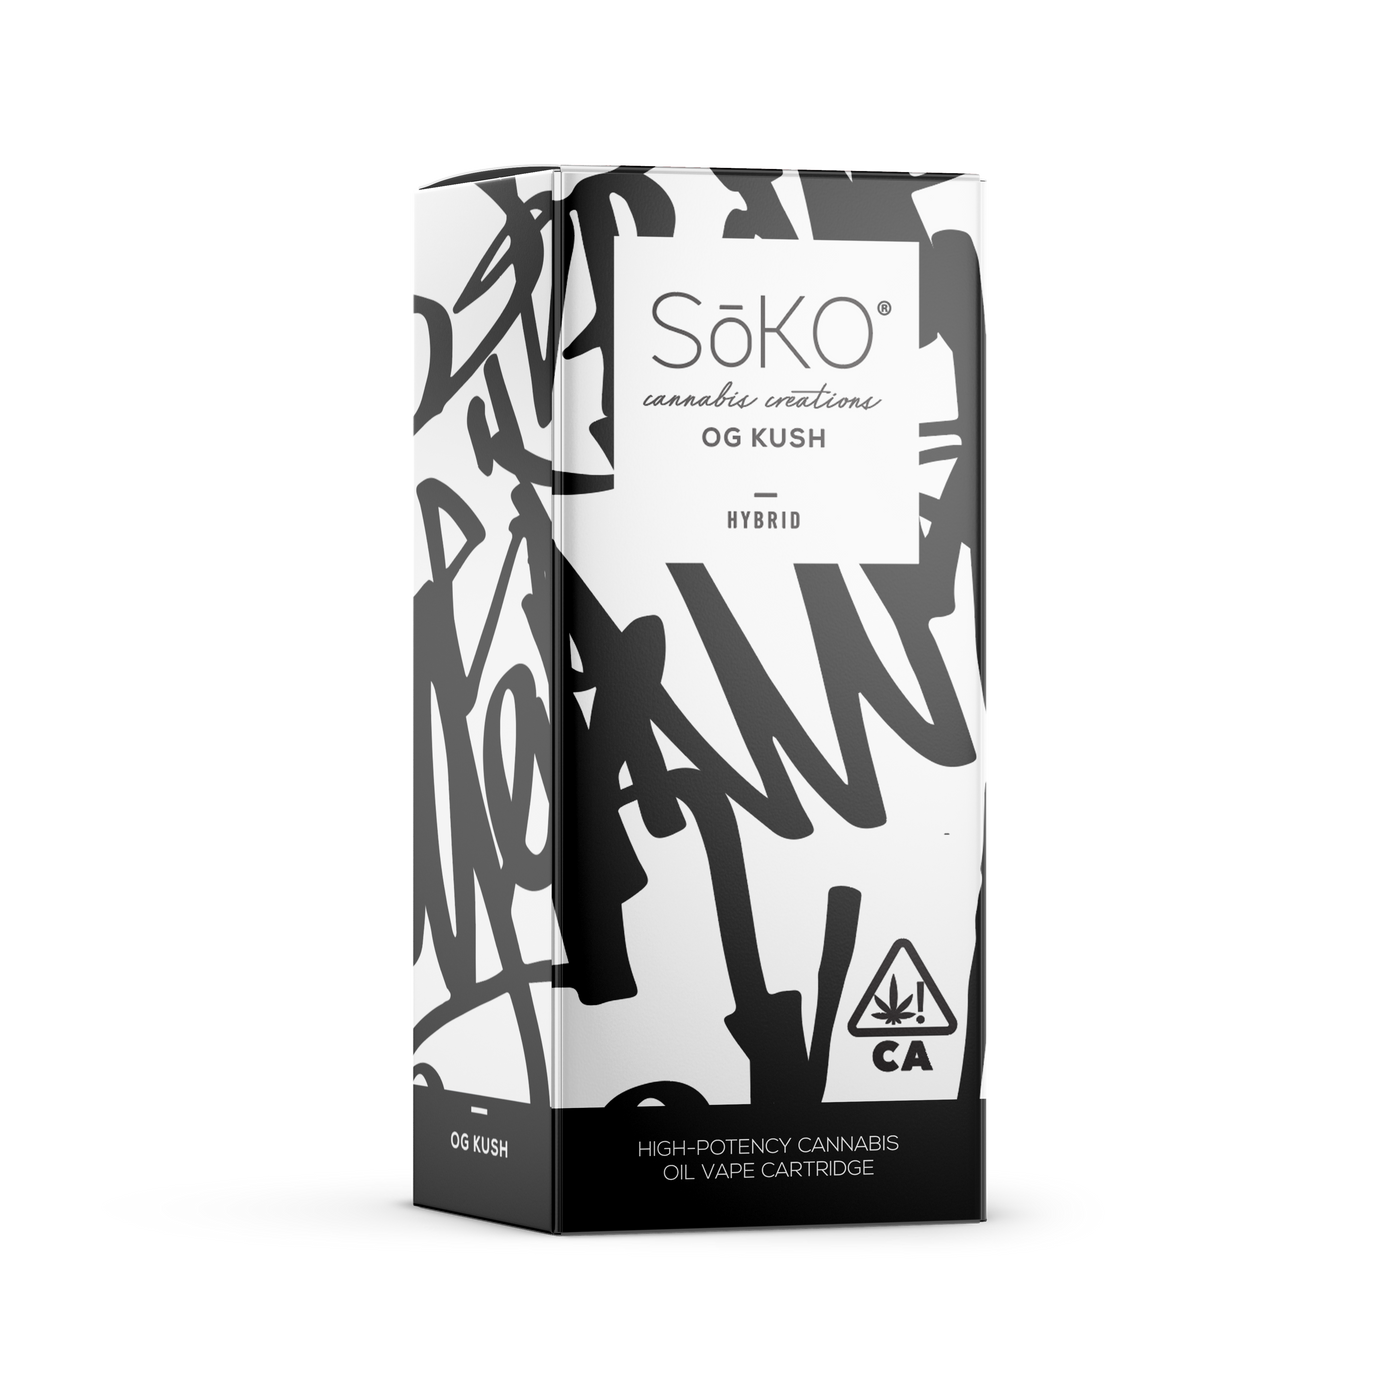 Buy Now -  The OG KUSH (HYBRID) HHC | Soko Cannabis Creations